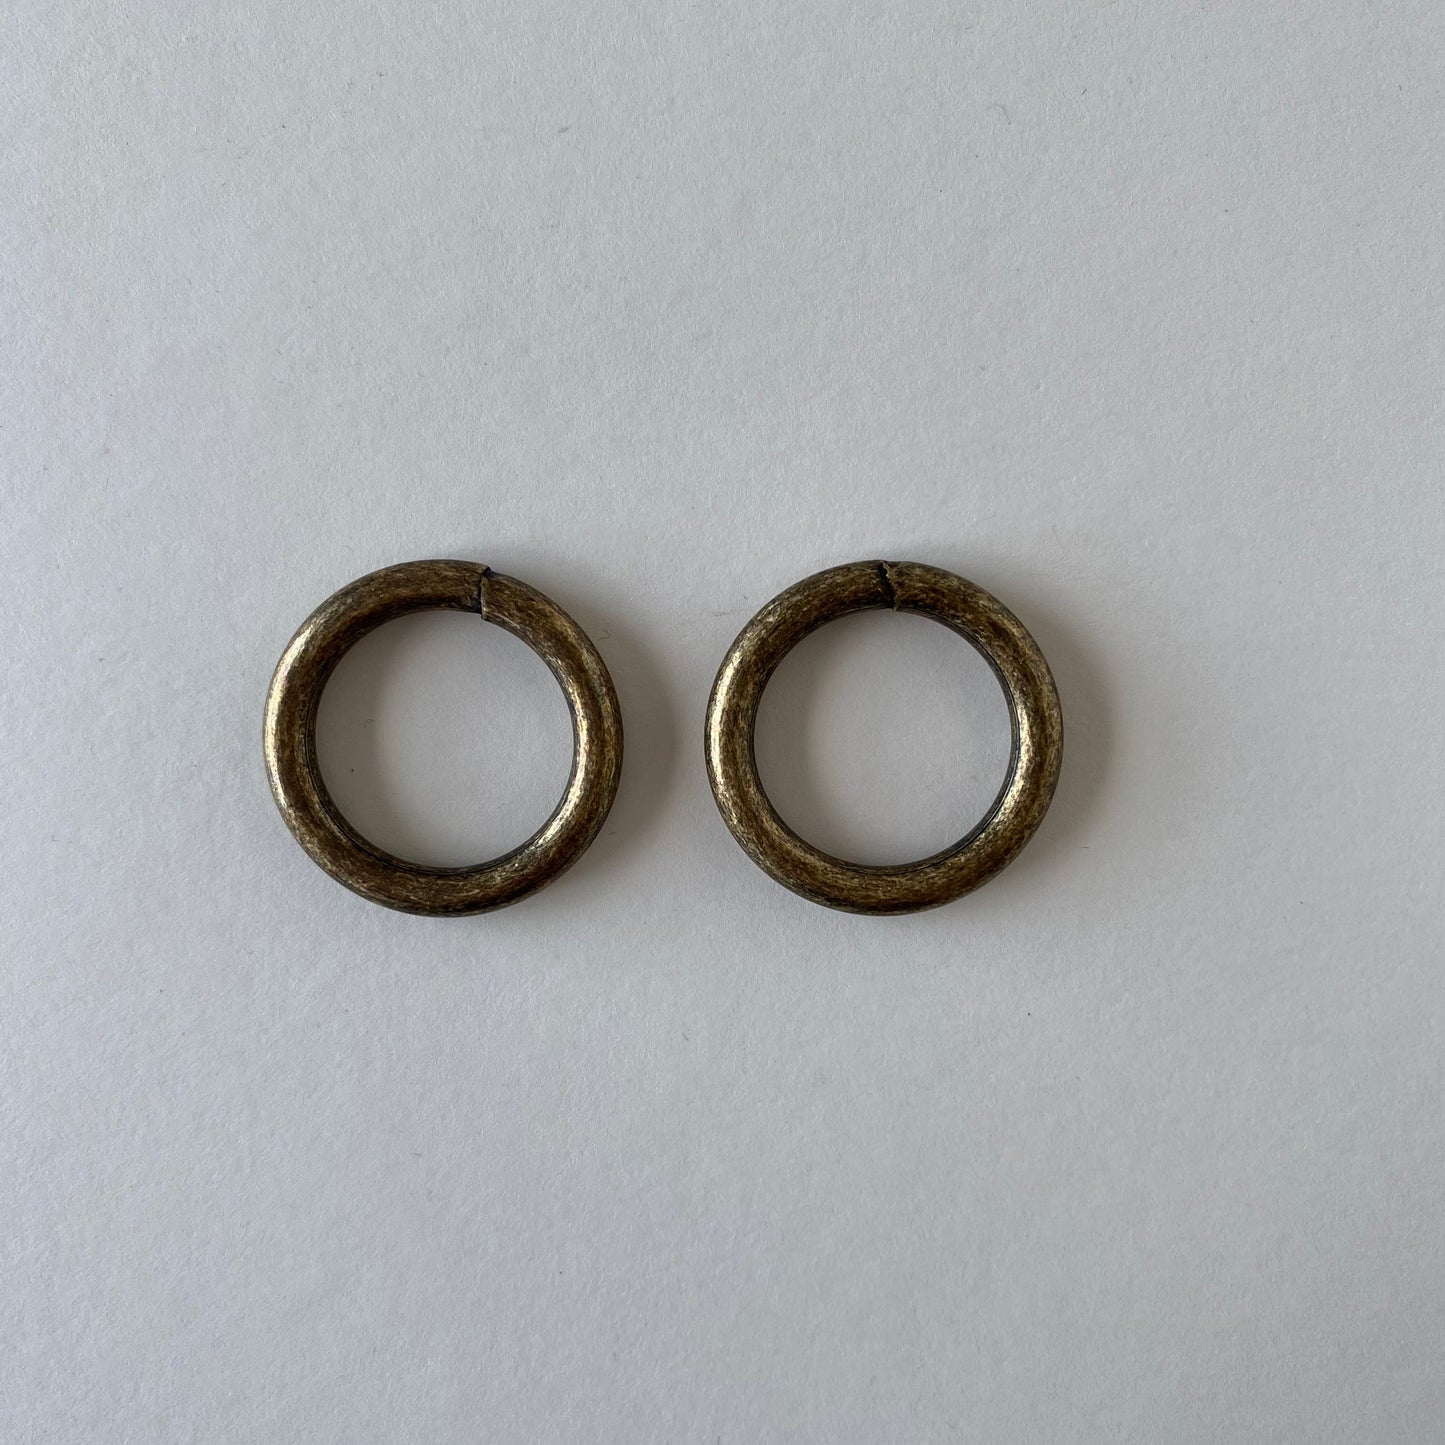 Round metal rings - 25mm